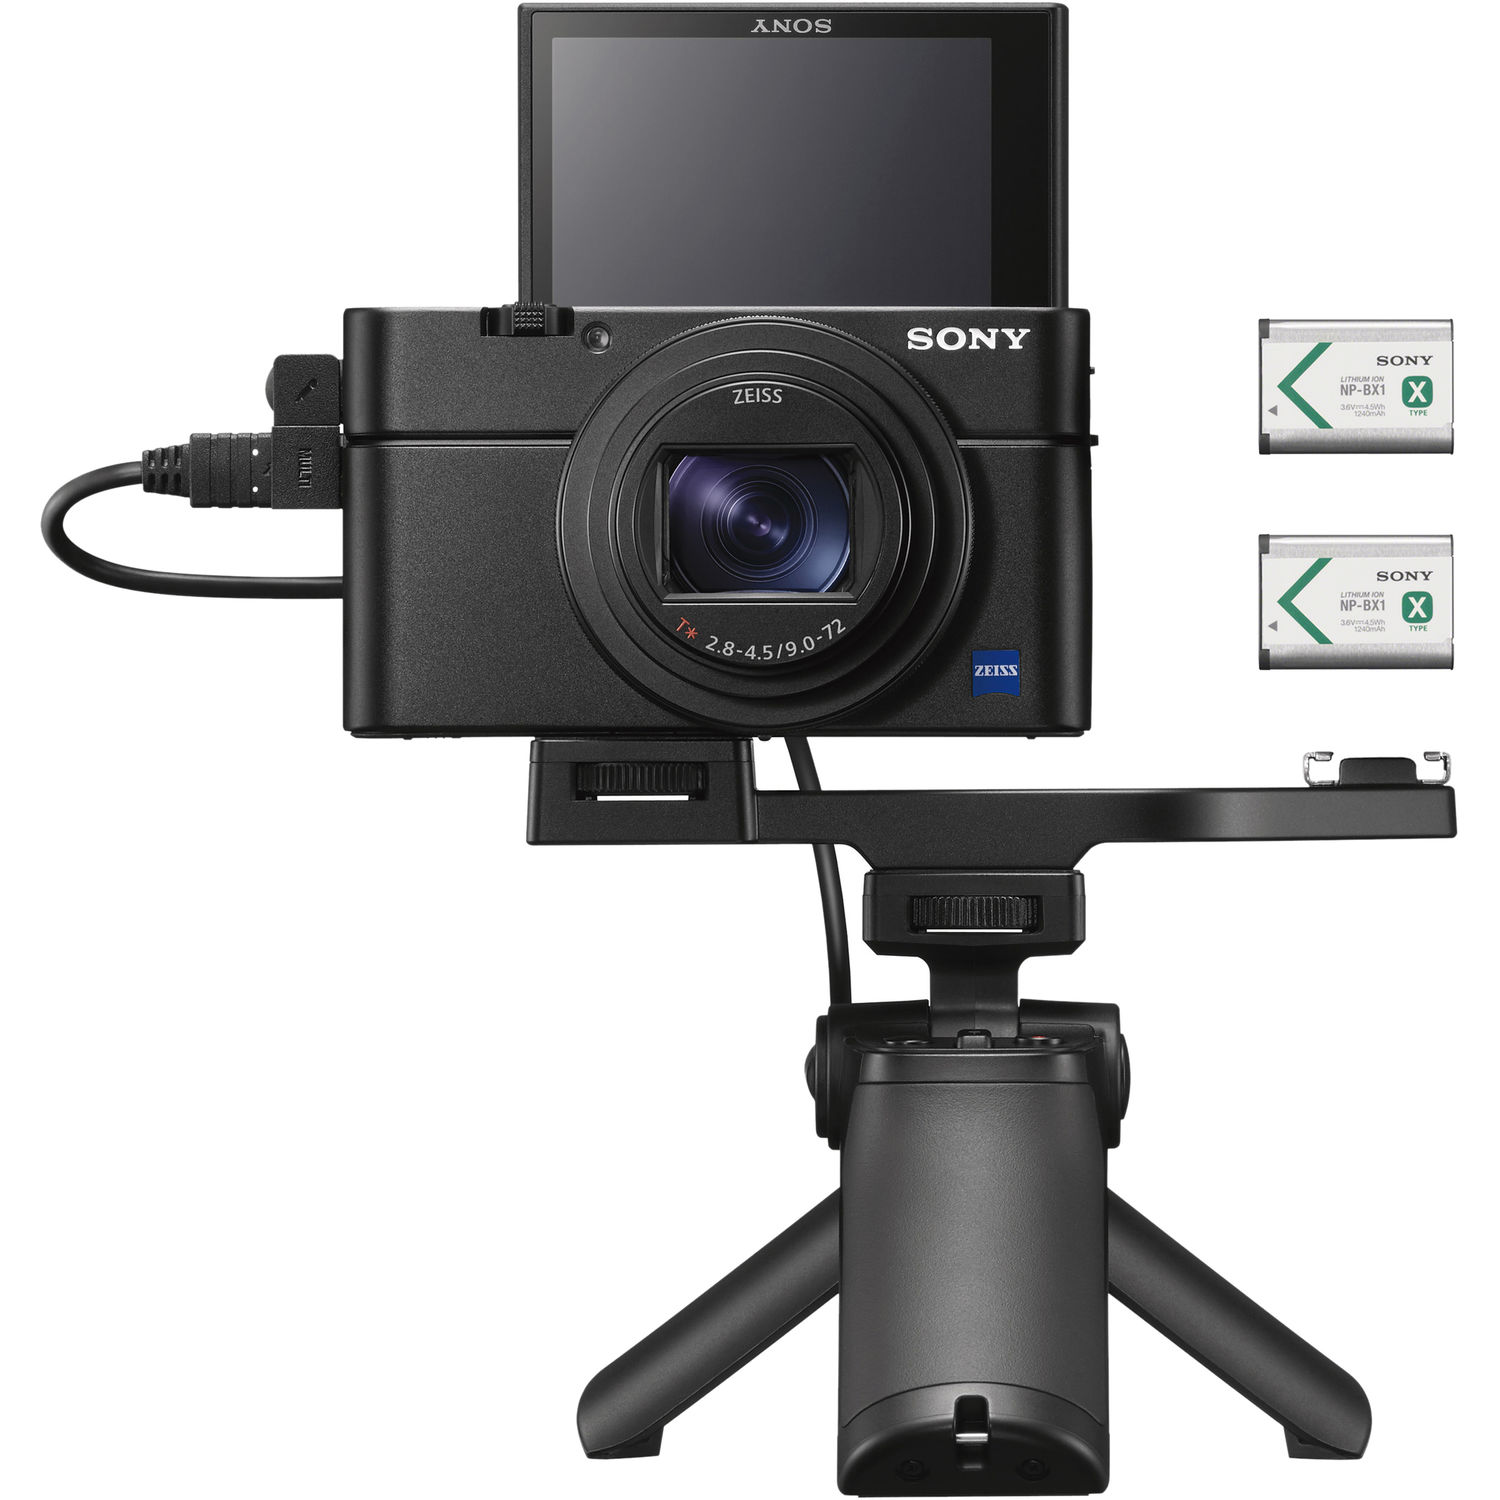 Cámara Digital Sony Cyber Shot Dsc Rx100 Vii con Kit de Agarre para Disparos